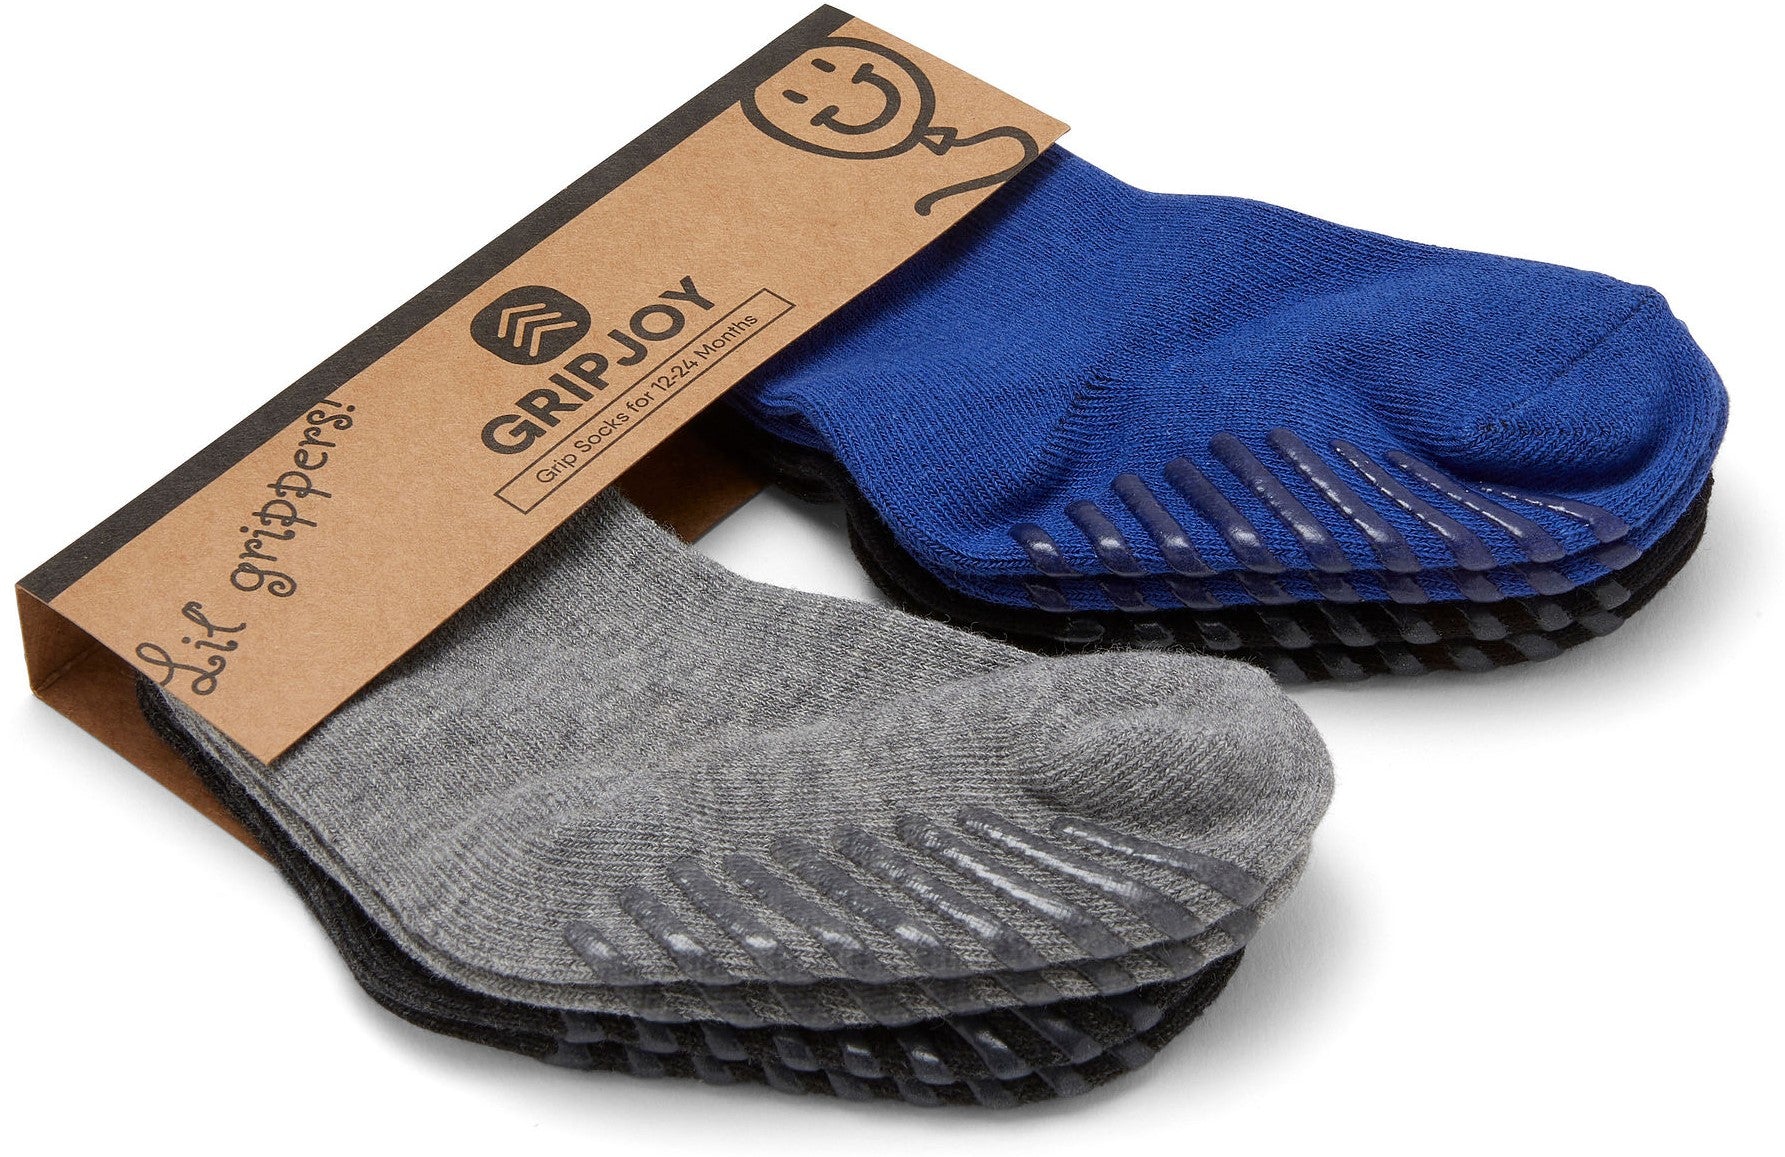 Blue/Black/Grey Grip Socks for Toddlers & Kids - 4 pairs - Gripjoy